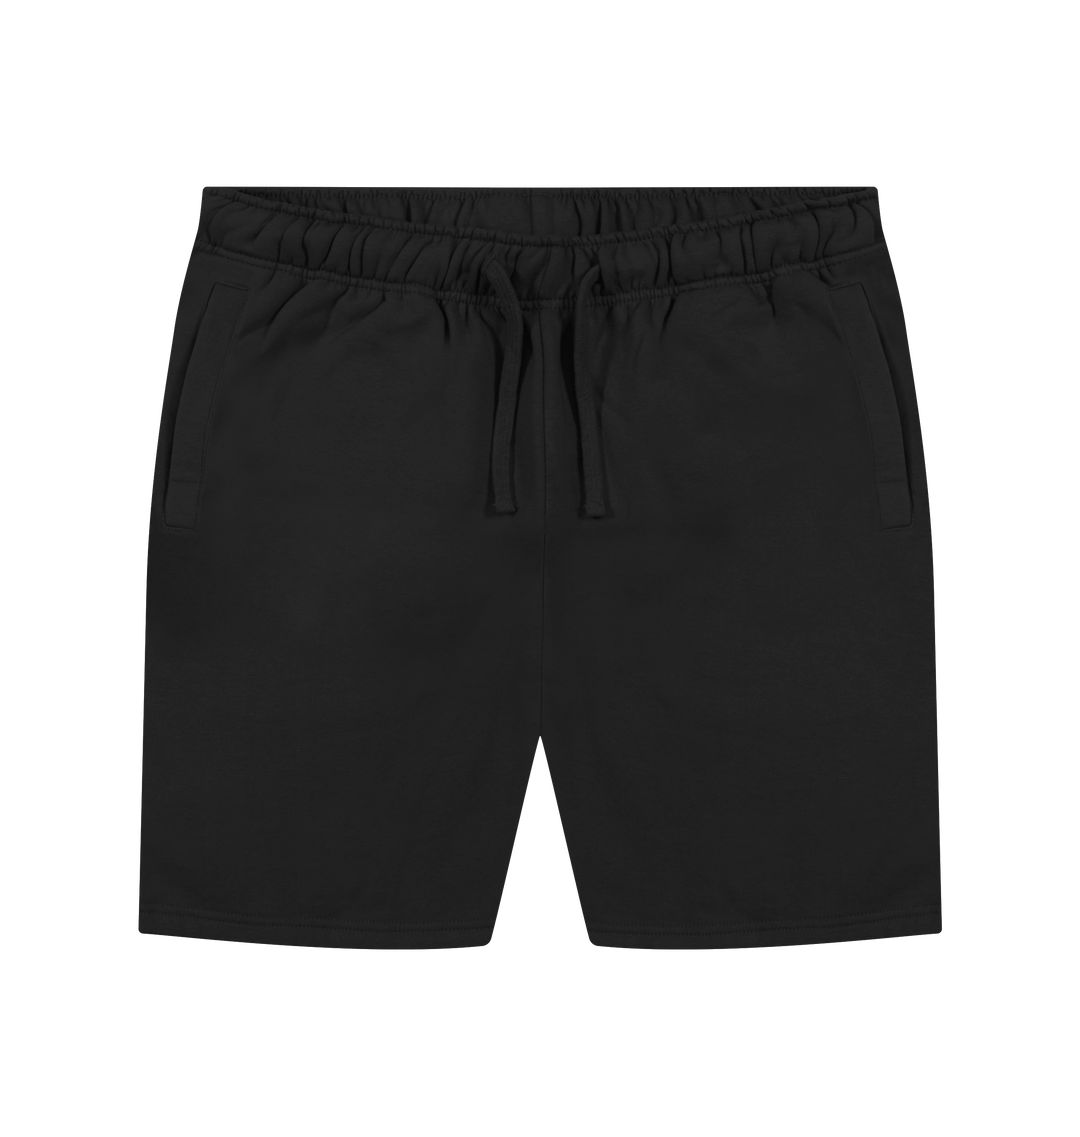 Black Men's organic cotton shorts